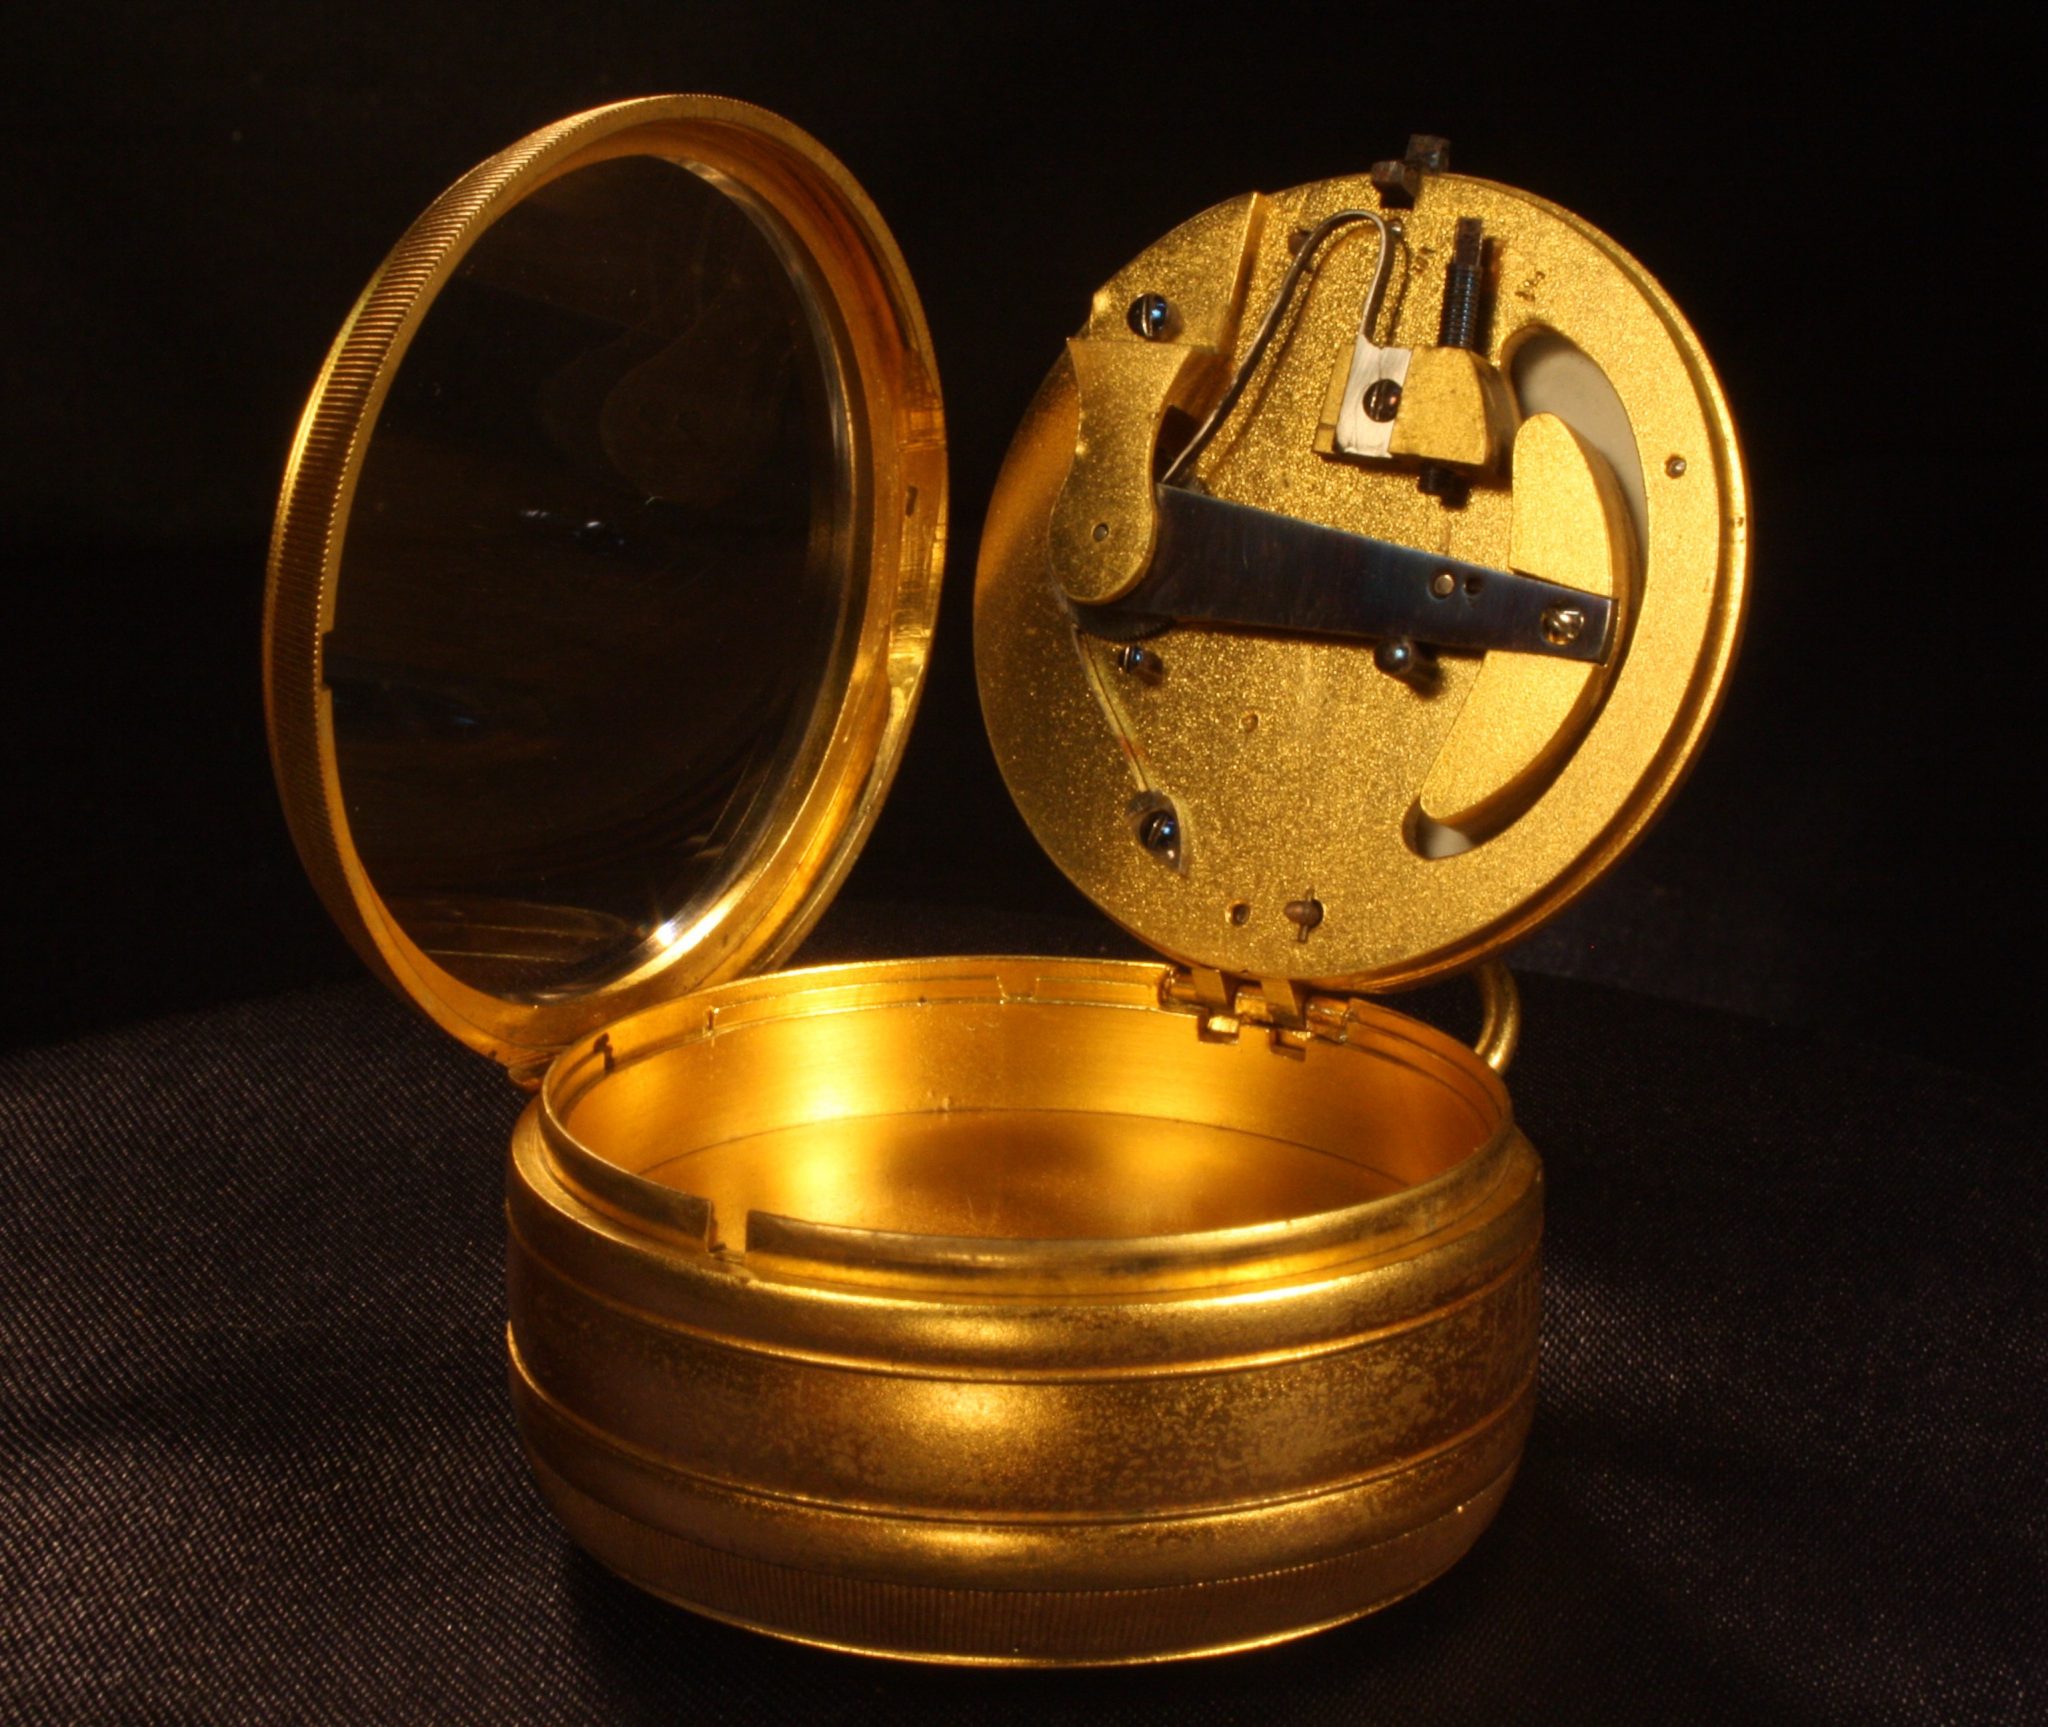 Image of Wood Abrahams Pocket Barometer & Pedometer Compendium